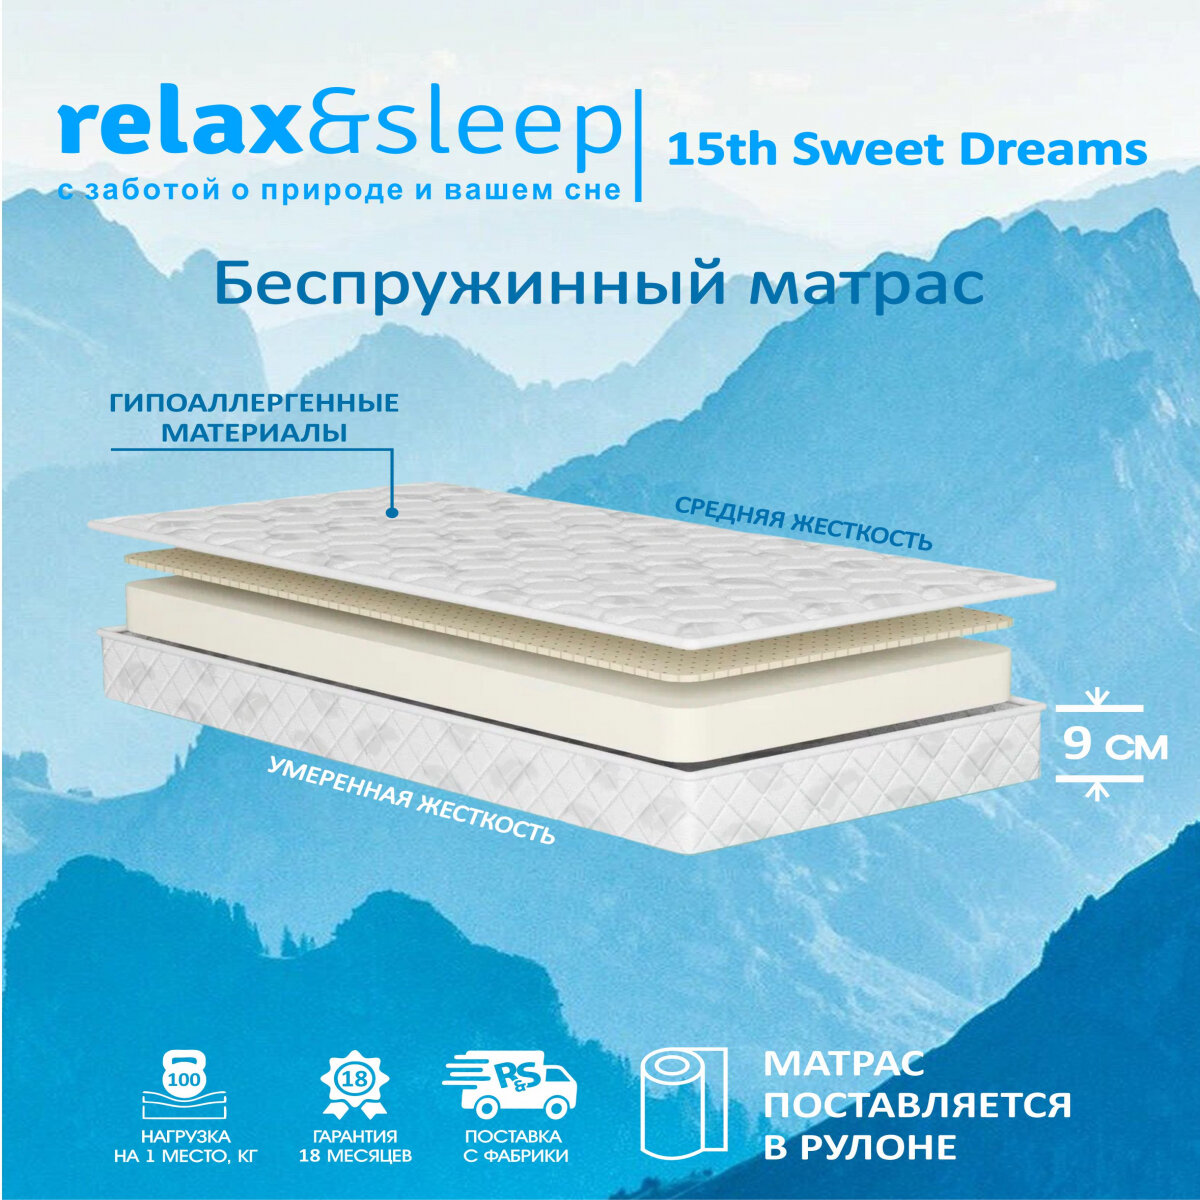 Матрас Relax&Sleep ортопедический беспружинный 15th Sweet Dreams (60 / 190)